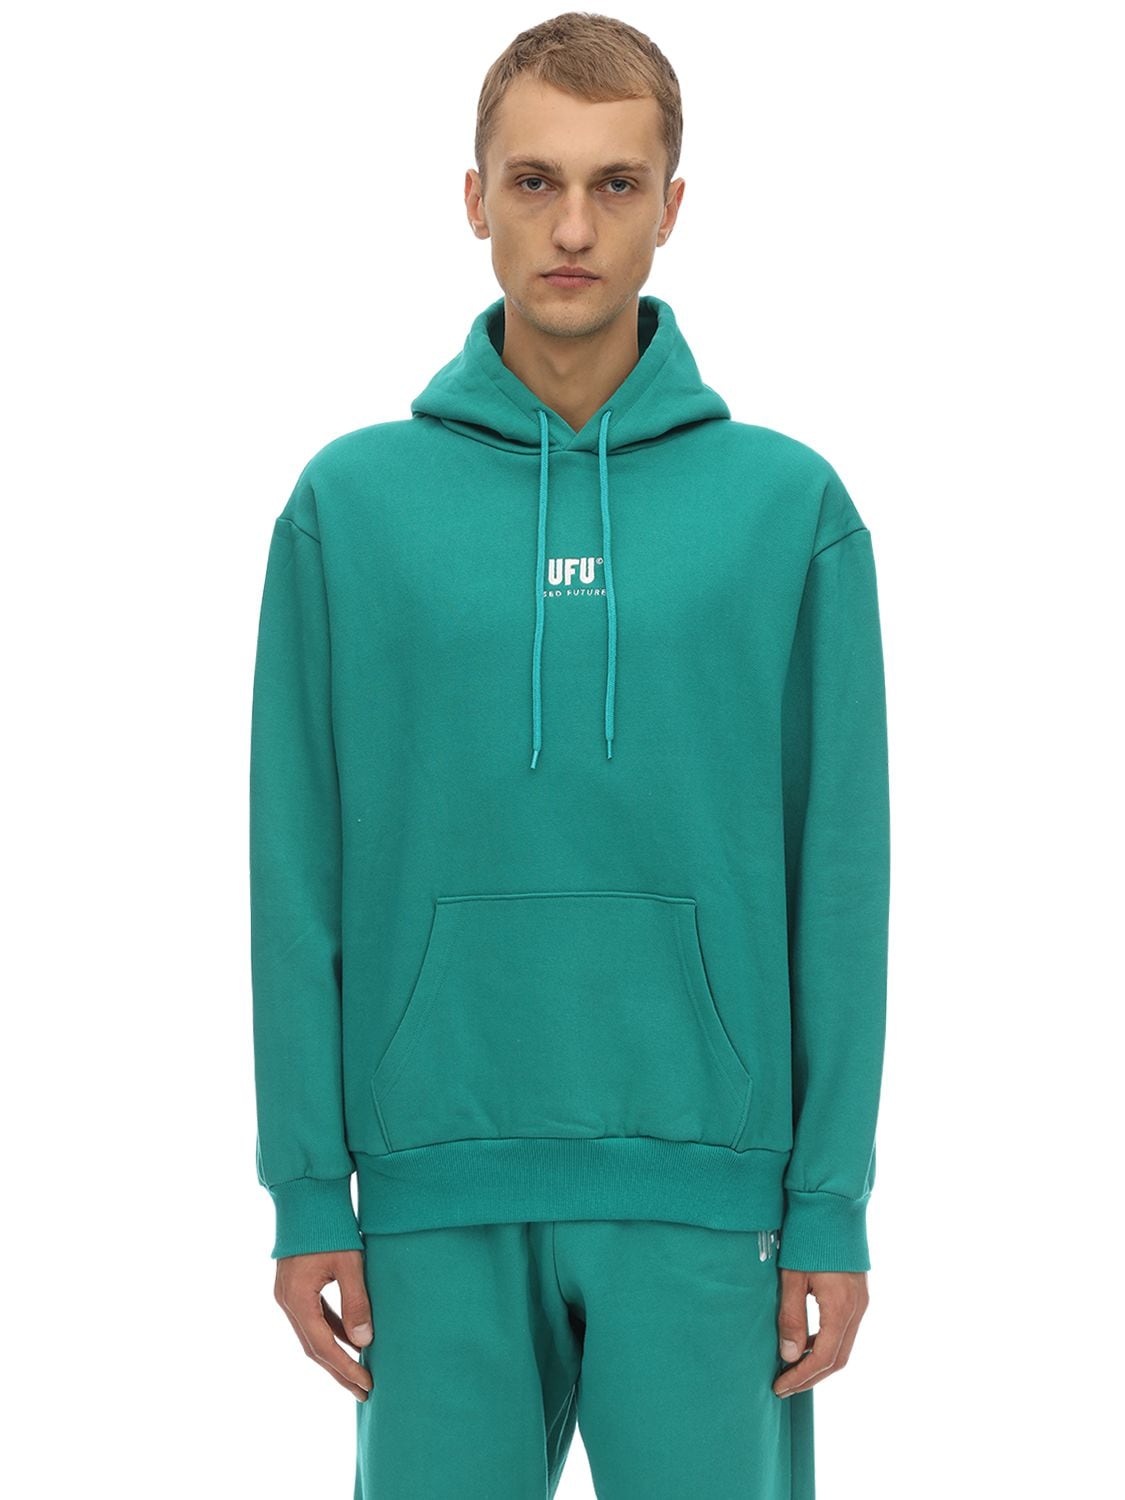 Ufu - Used Future Emb Cotton Jersey Sweatshirt Hoodie In Blue